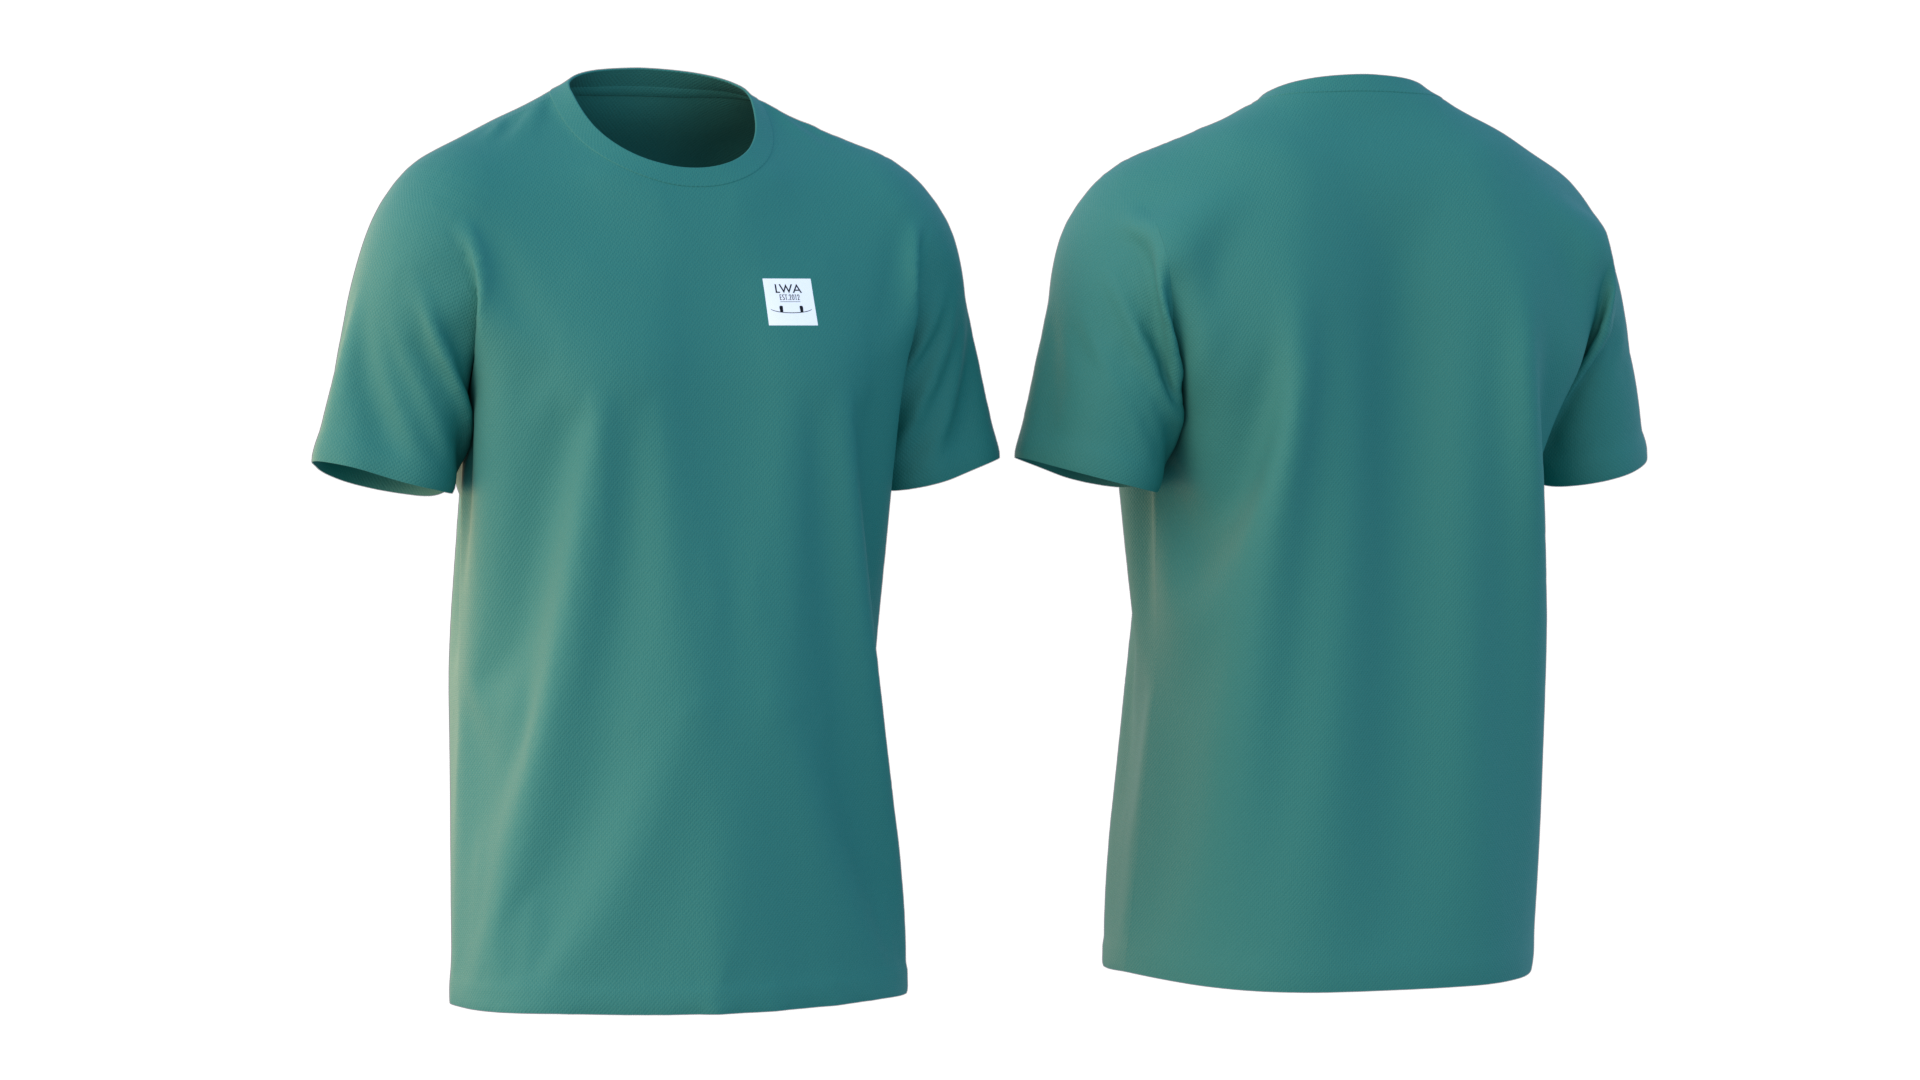 LWA Shirt Label one green